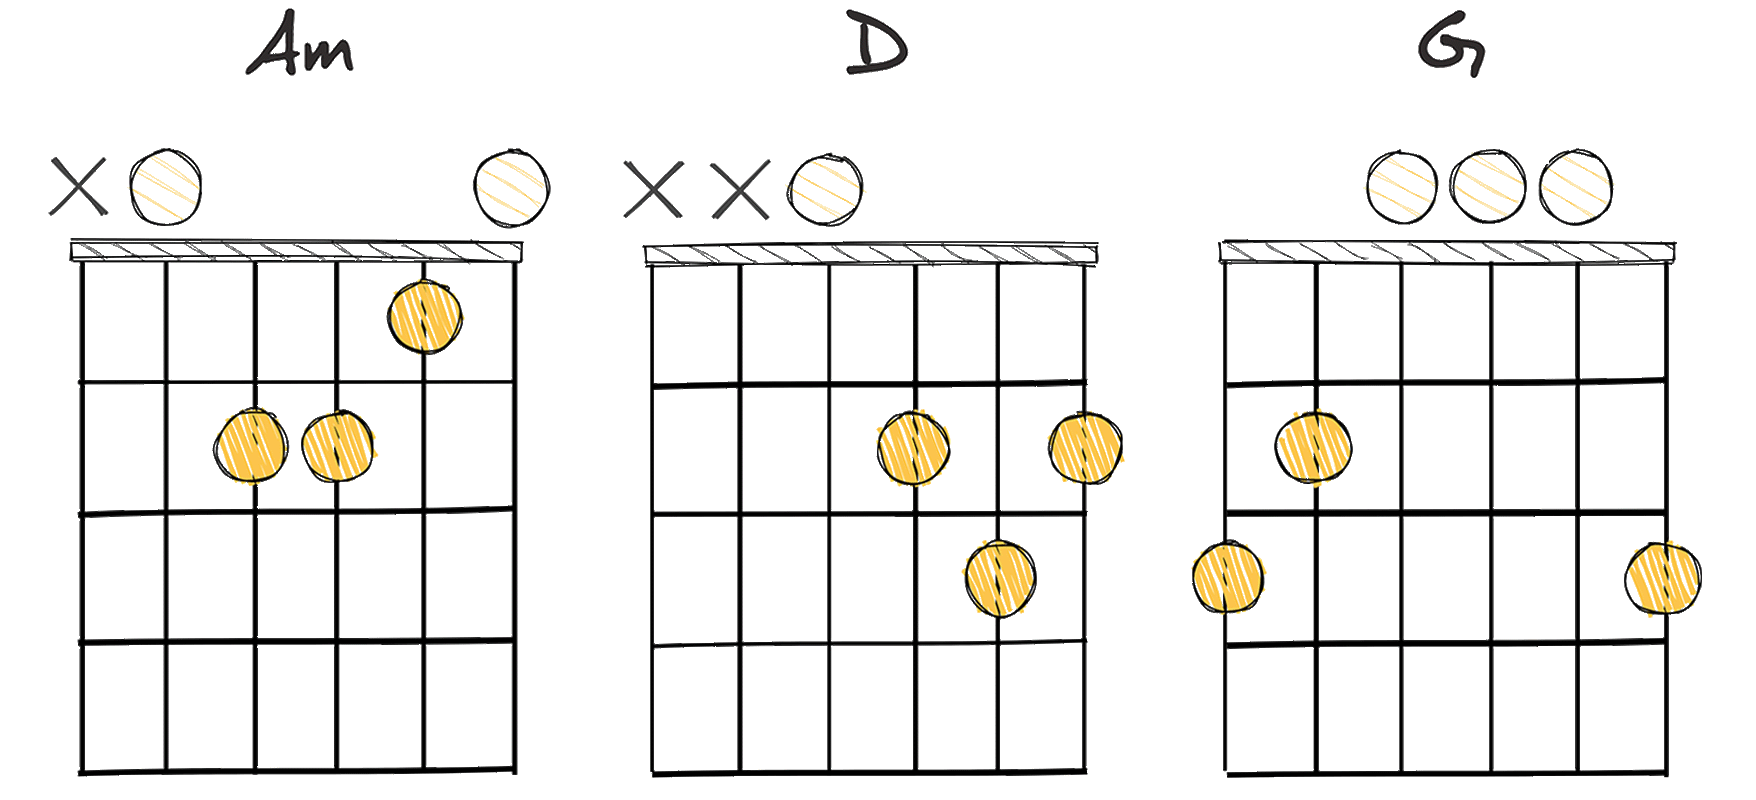 ii - V - I (2-5-1) chords diagram